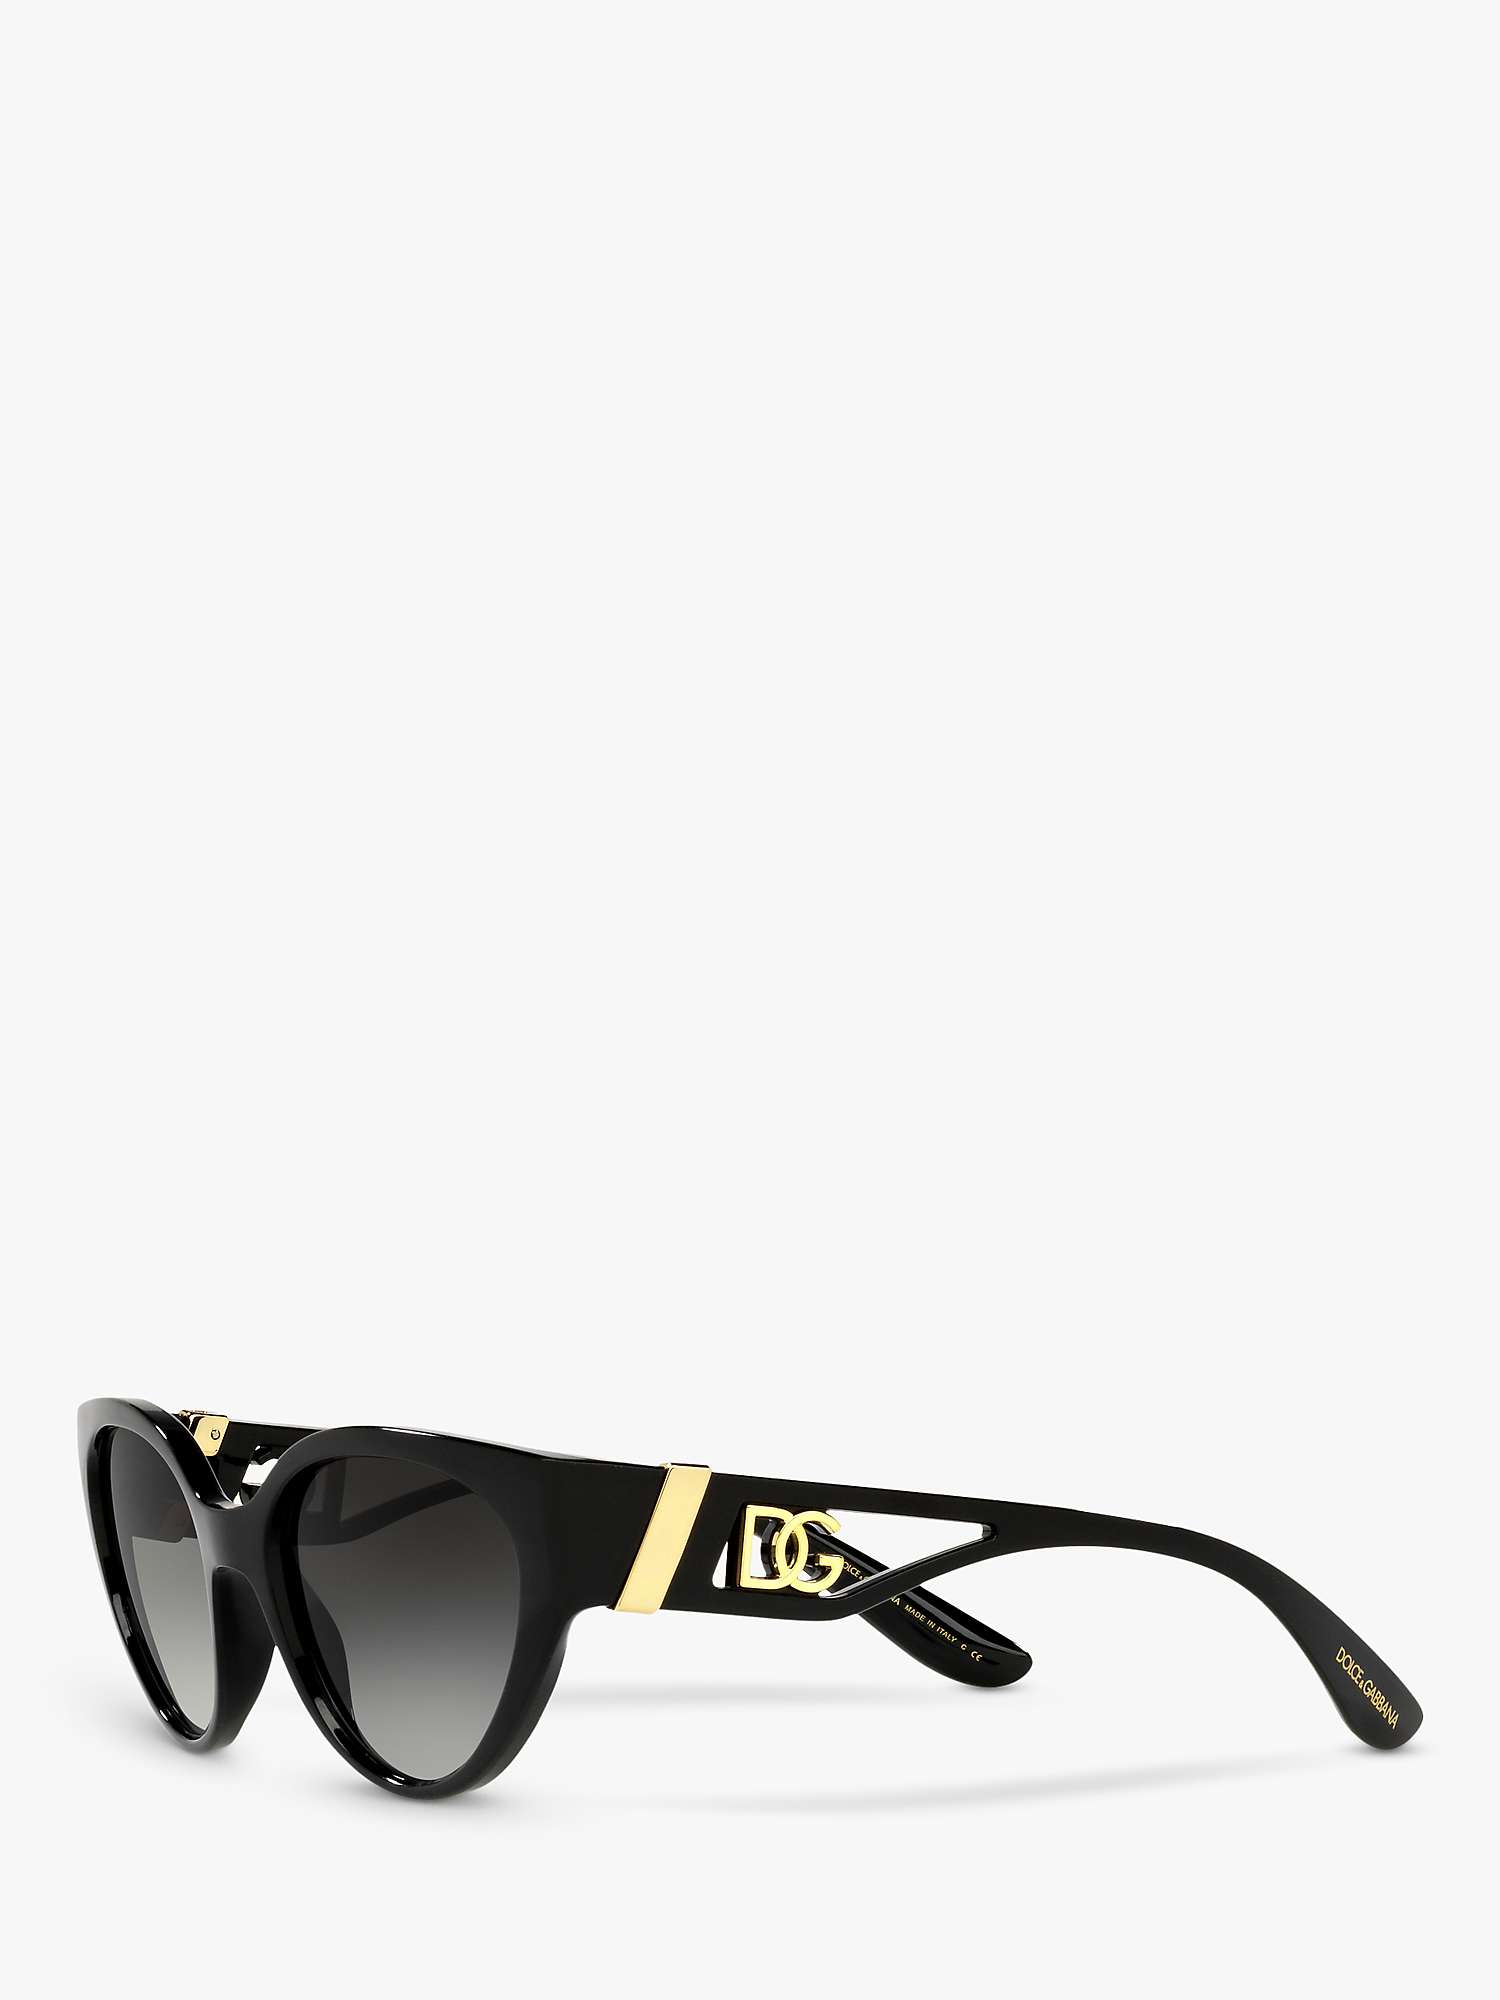 Dolce & Gabbana DG6146 Women's Cat's Eye Sunglasses, Black/Grey